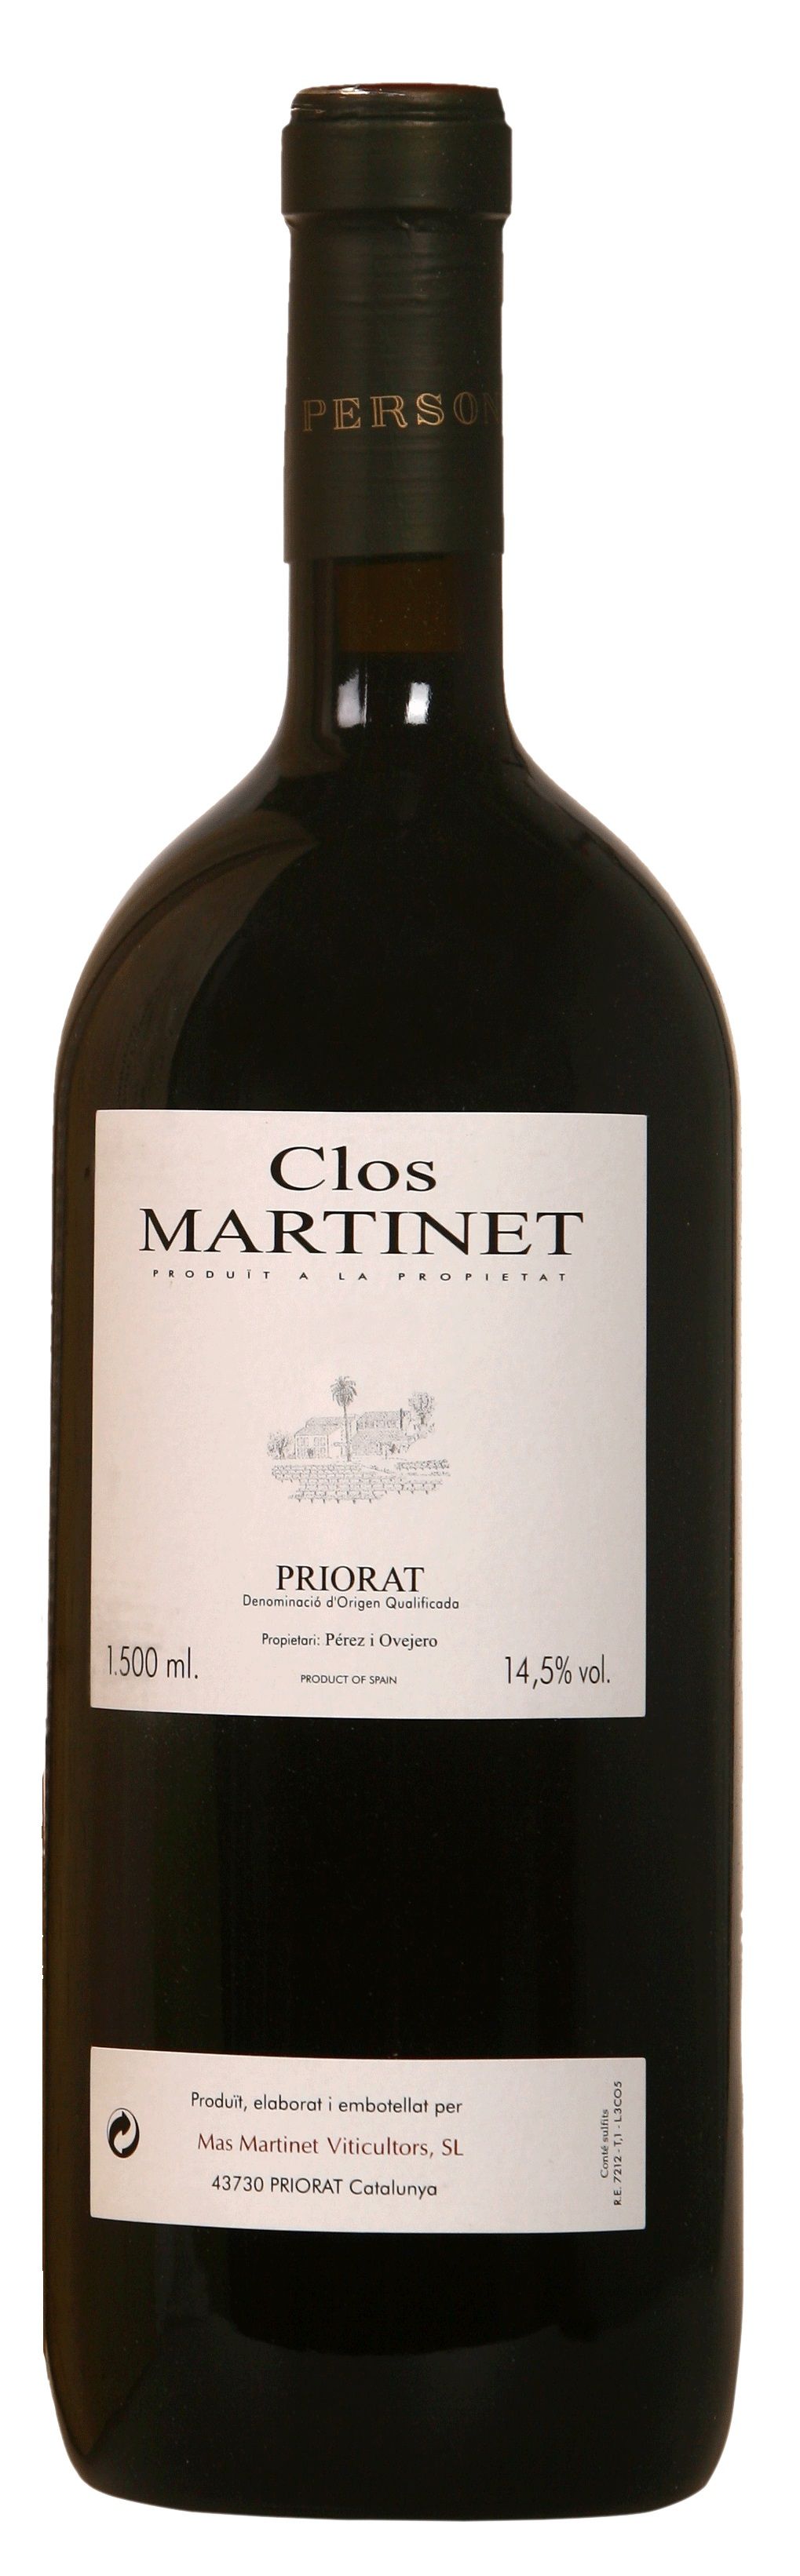 Mas Martinet, Clos Martinet, 2008